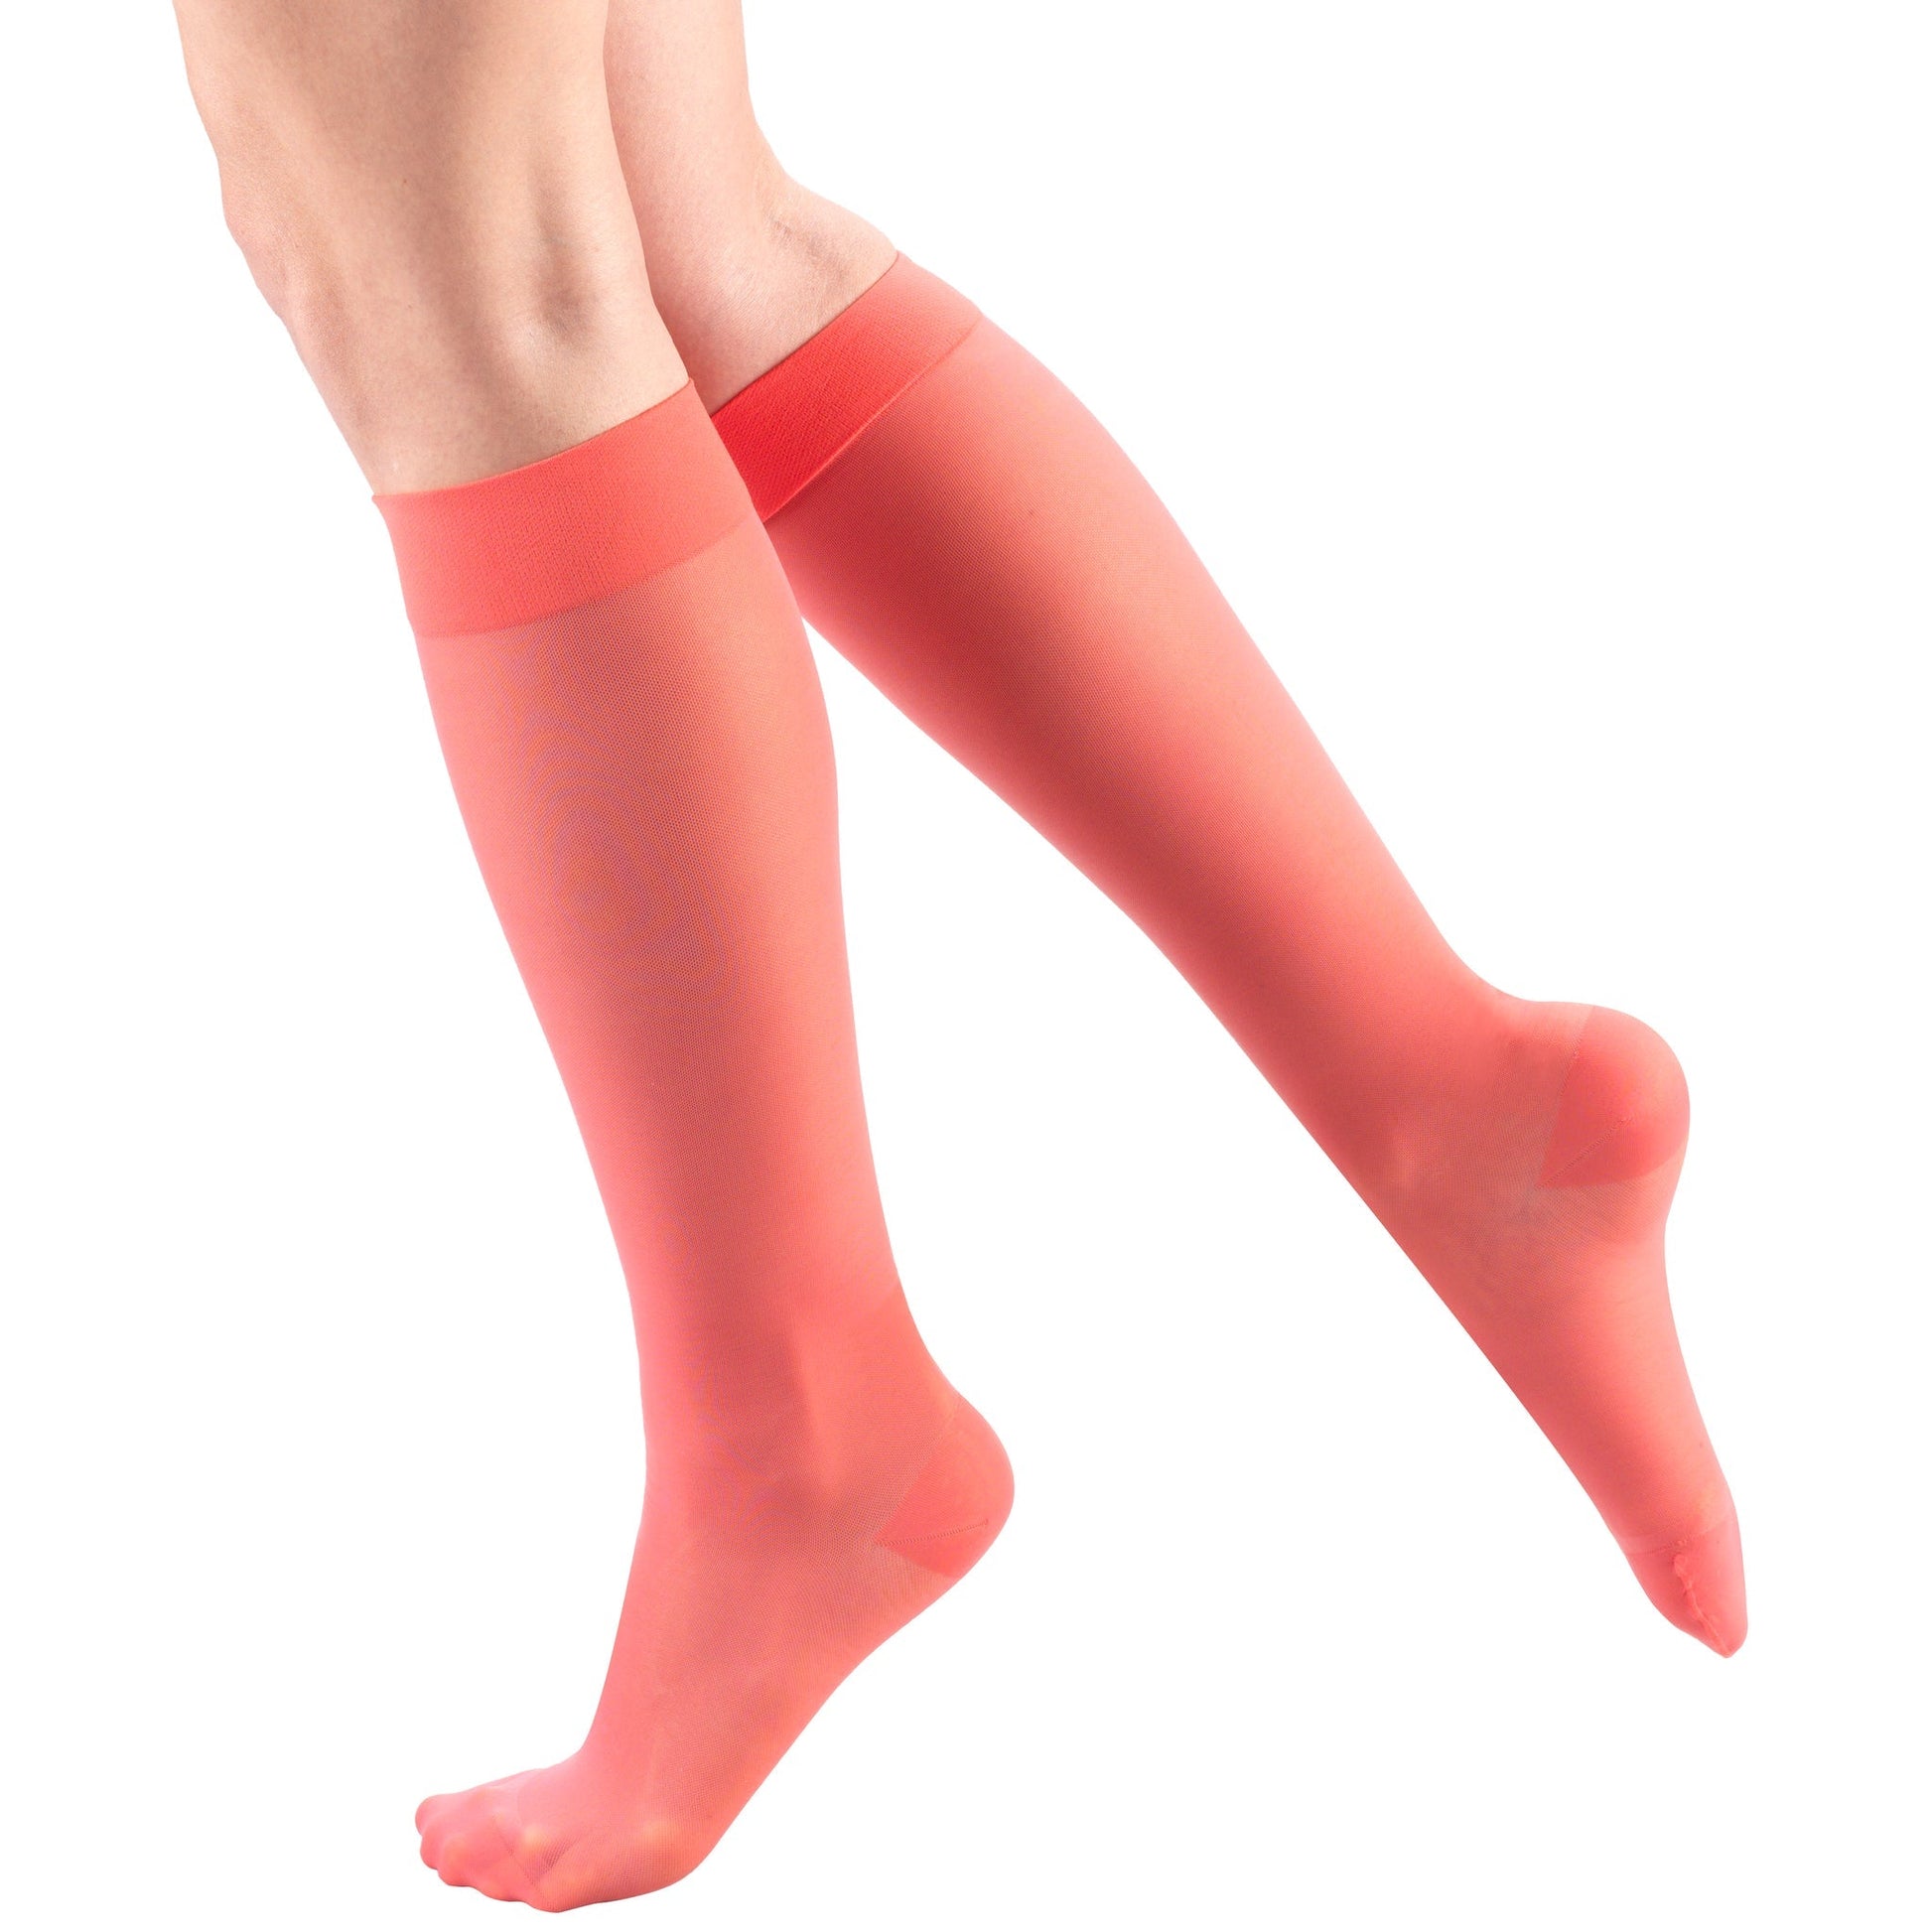 Compression Hosiery for Women, 15-20 mmhg, Beige, Medium – Truform :  Support stocking for women